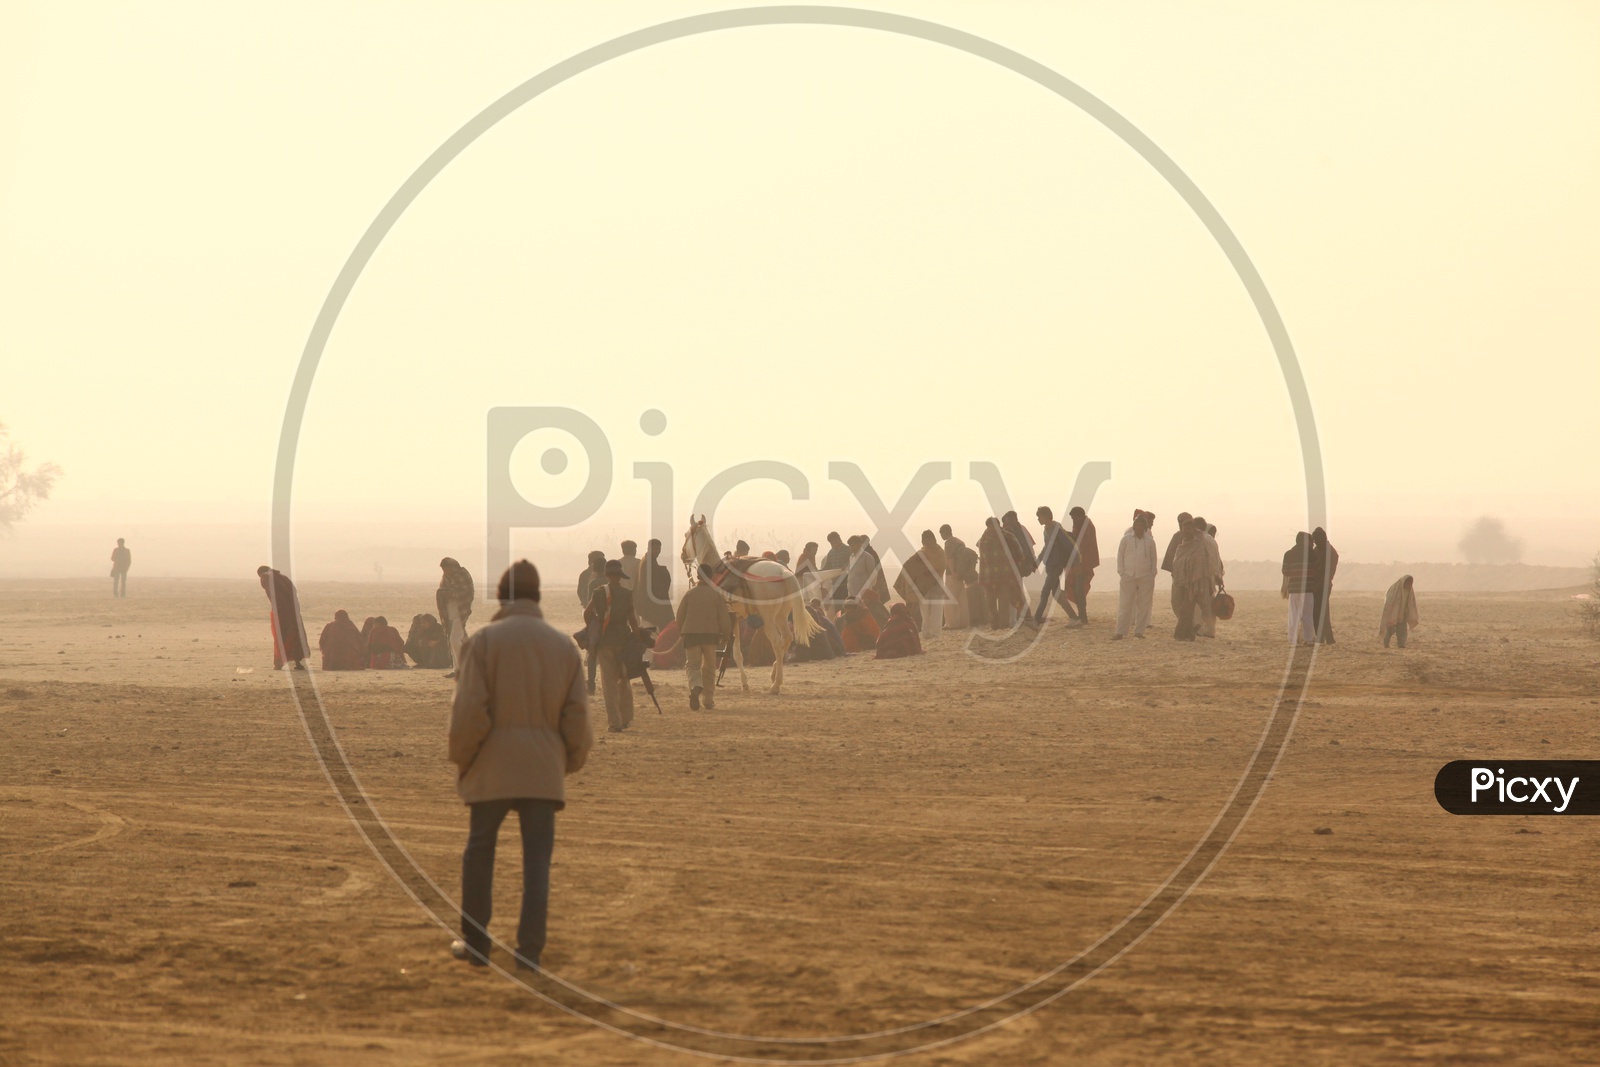 People in a Desert in Rajasthan.